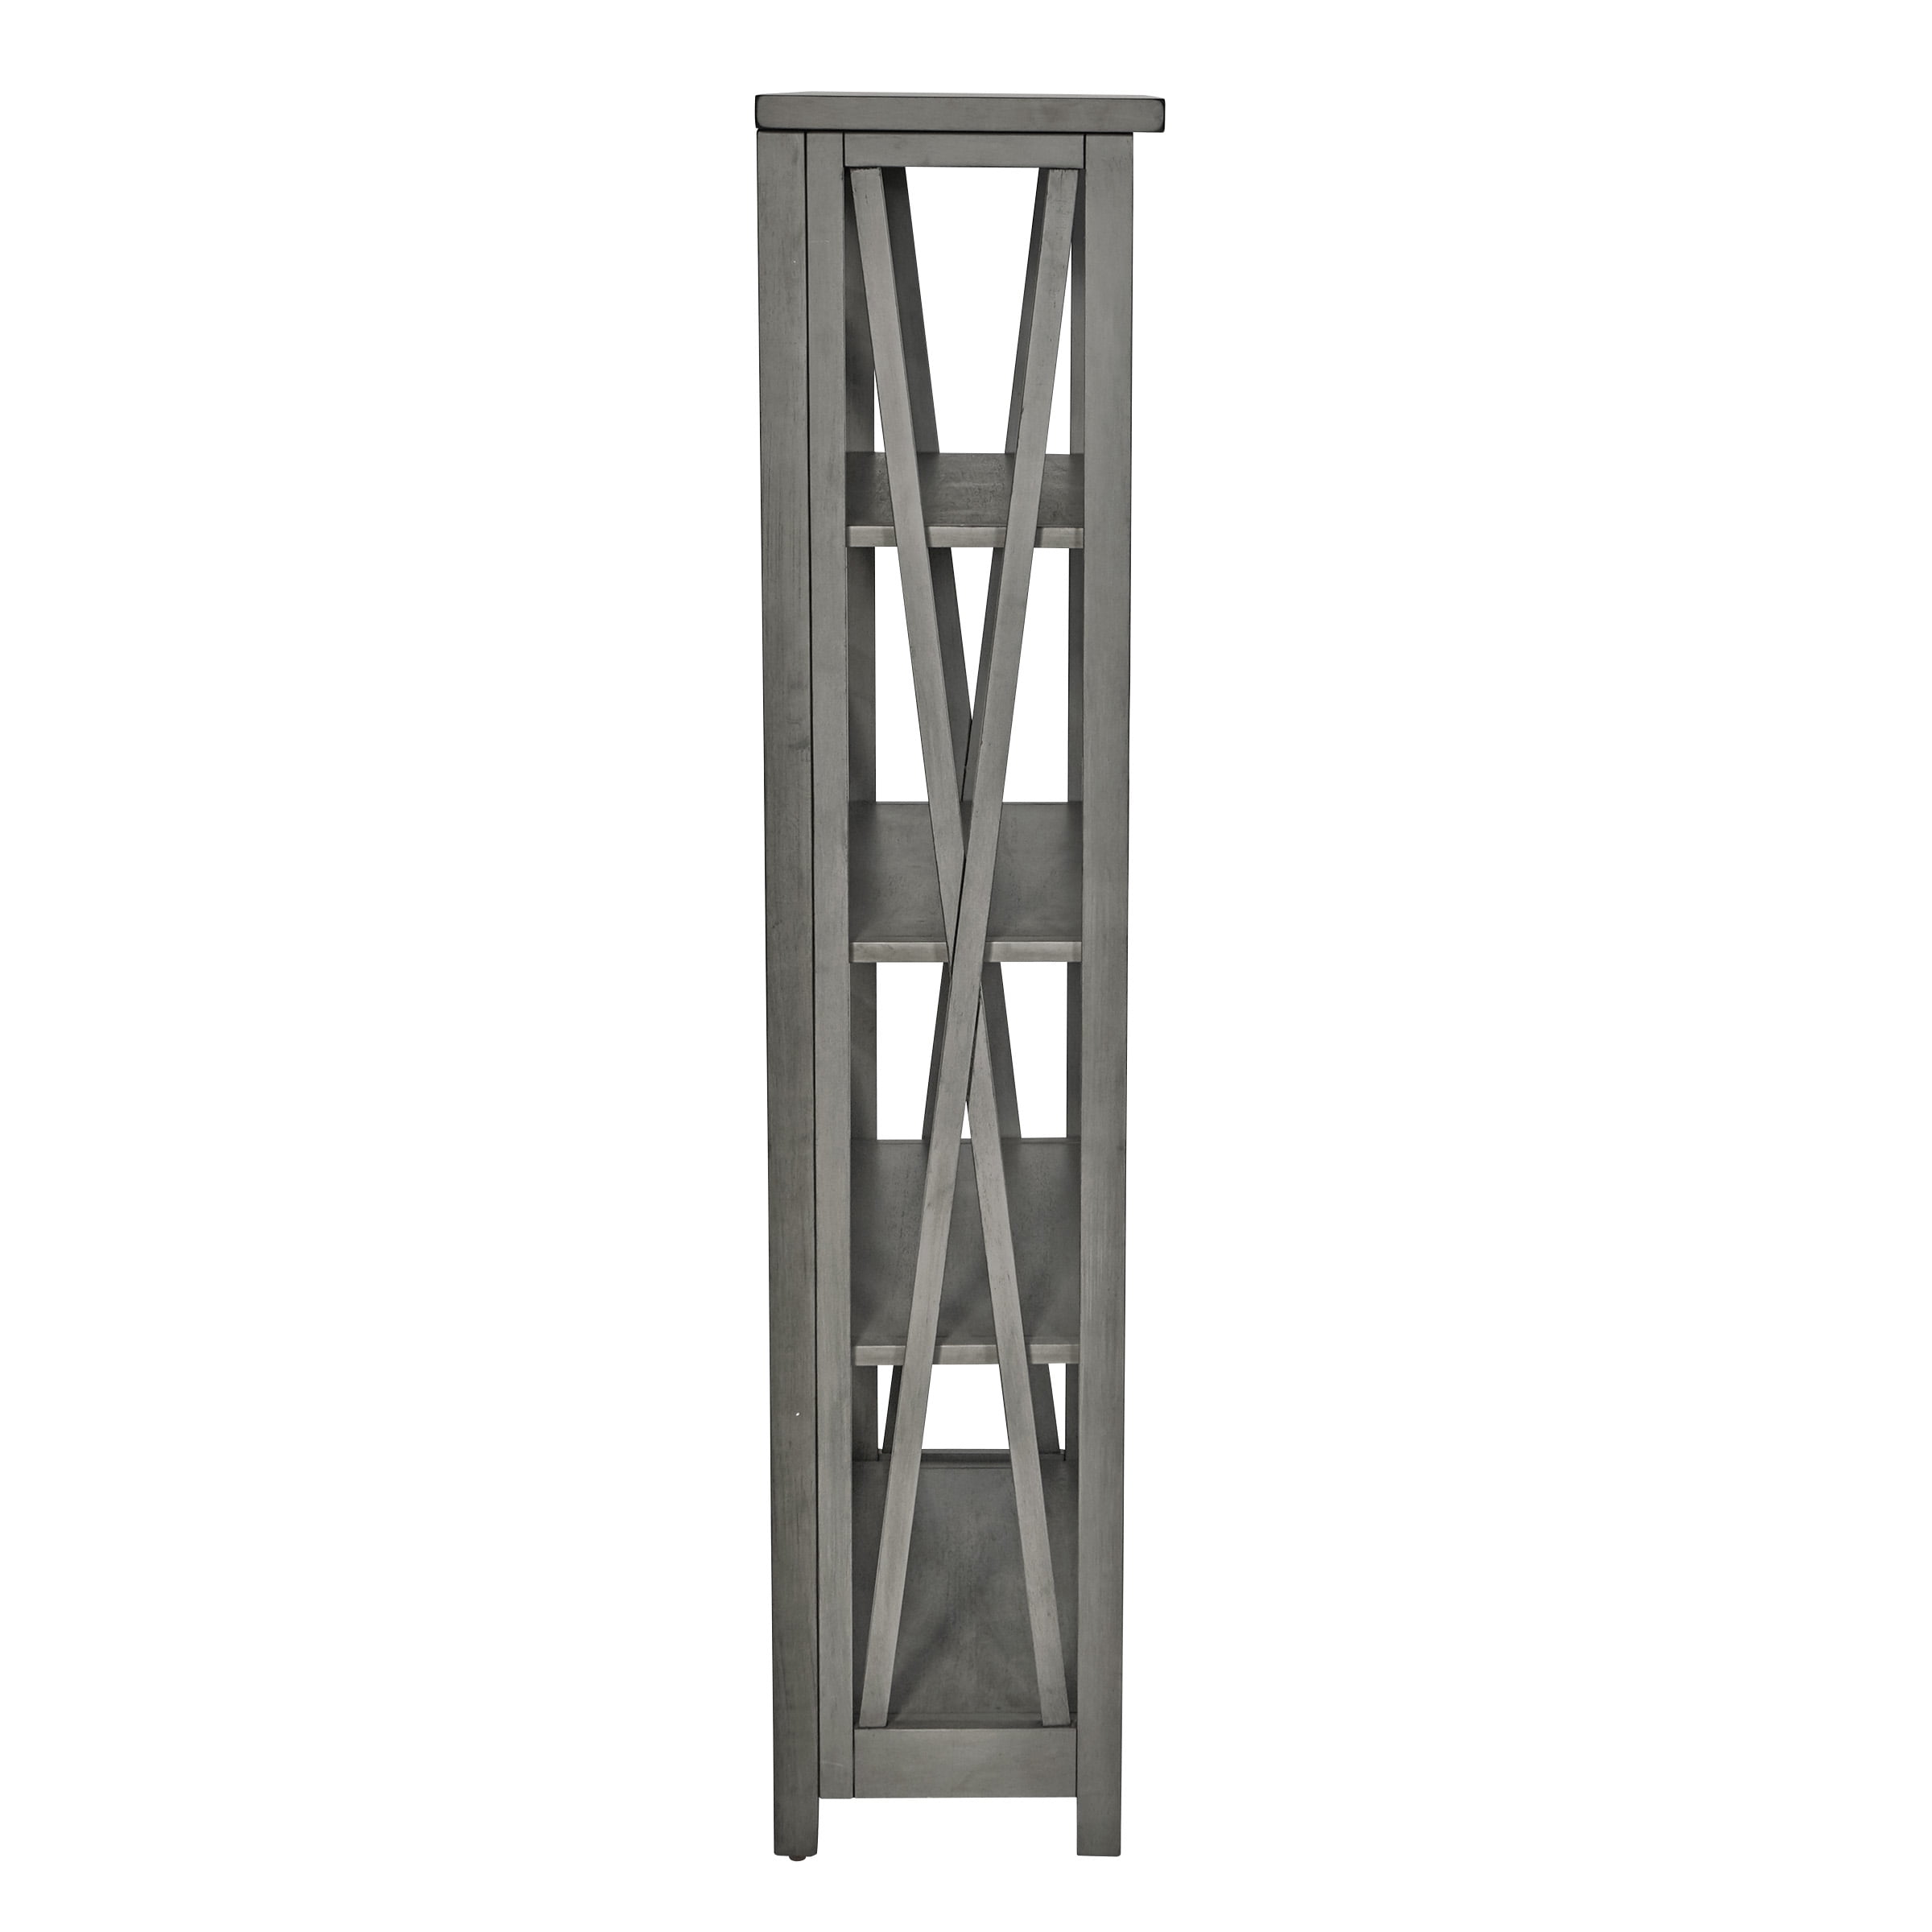 OSP Home Furnishings Hillsboro 5-Shelf Ladder Bookcase Grey Wash